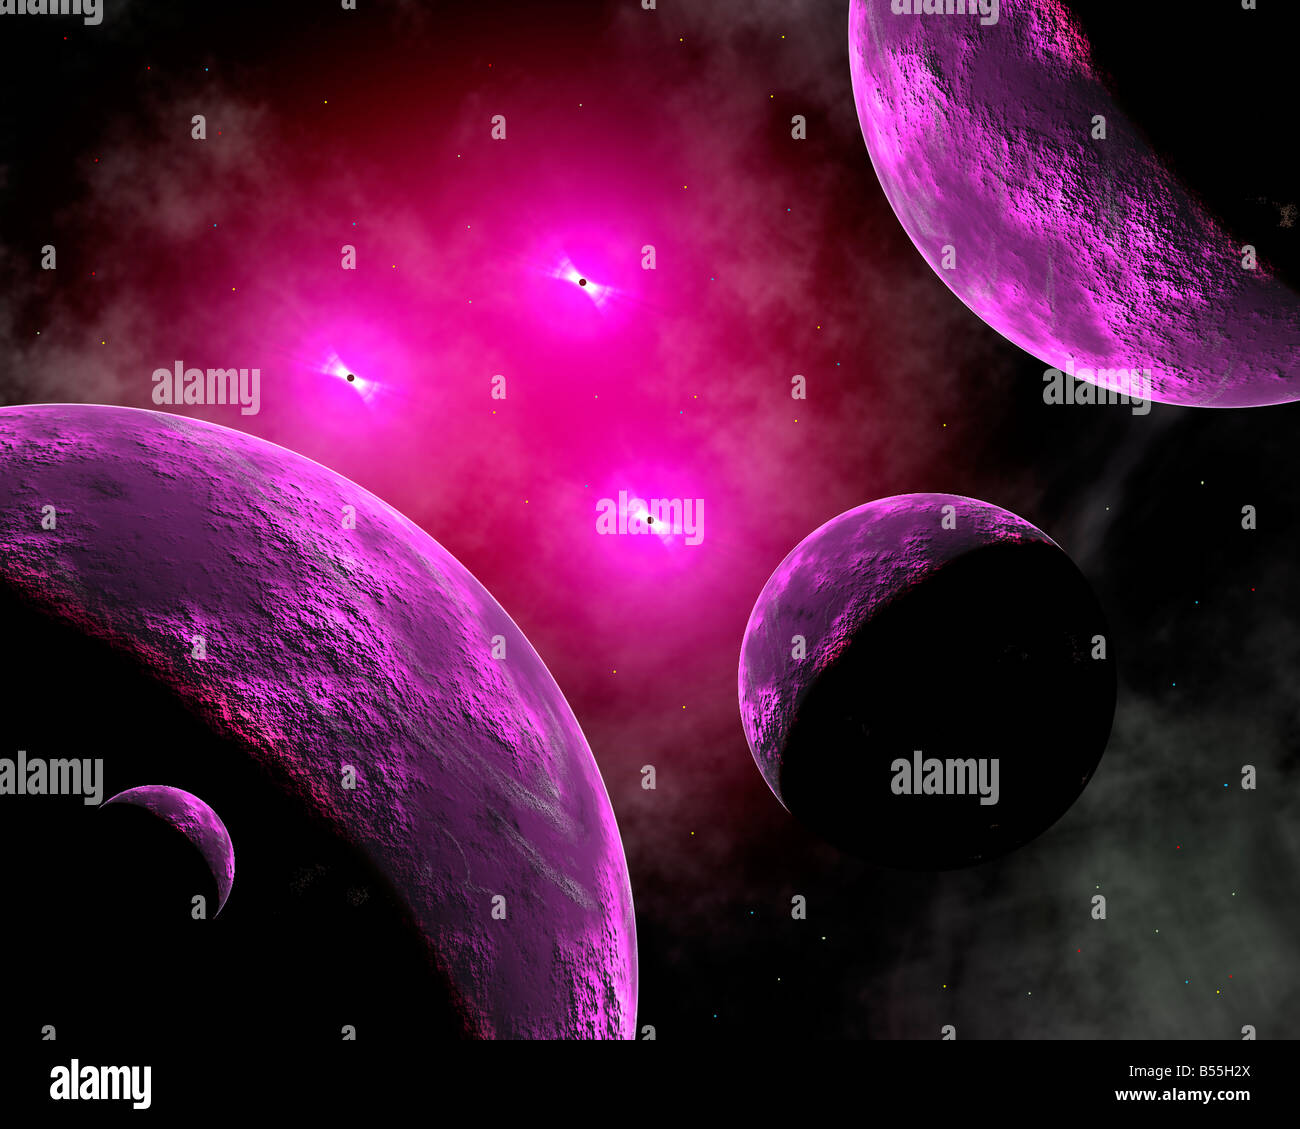 Trinary Star System, A SciFi Fantasy Concept Image. Stock Photo